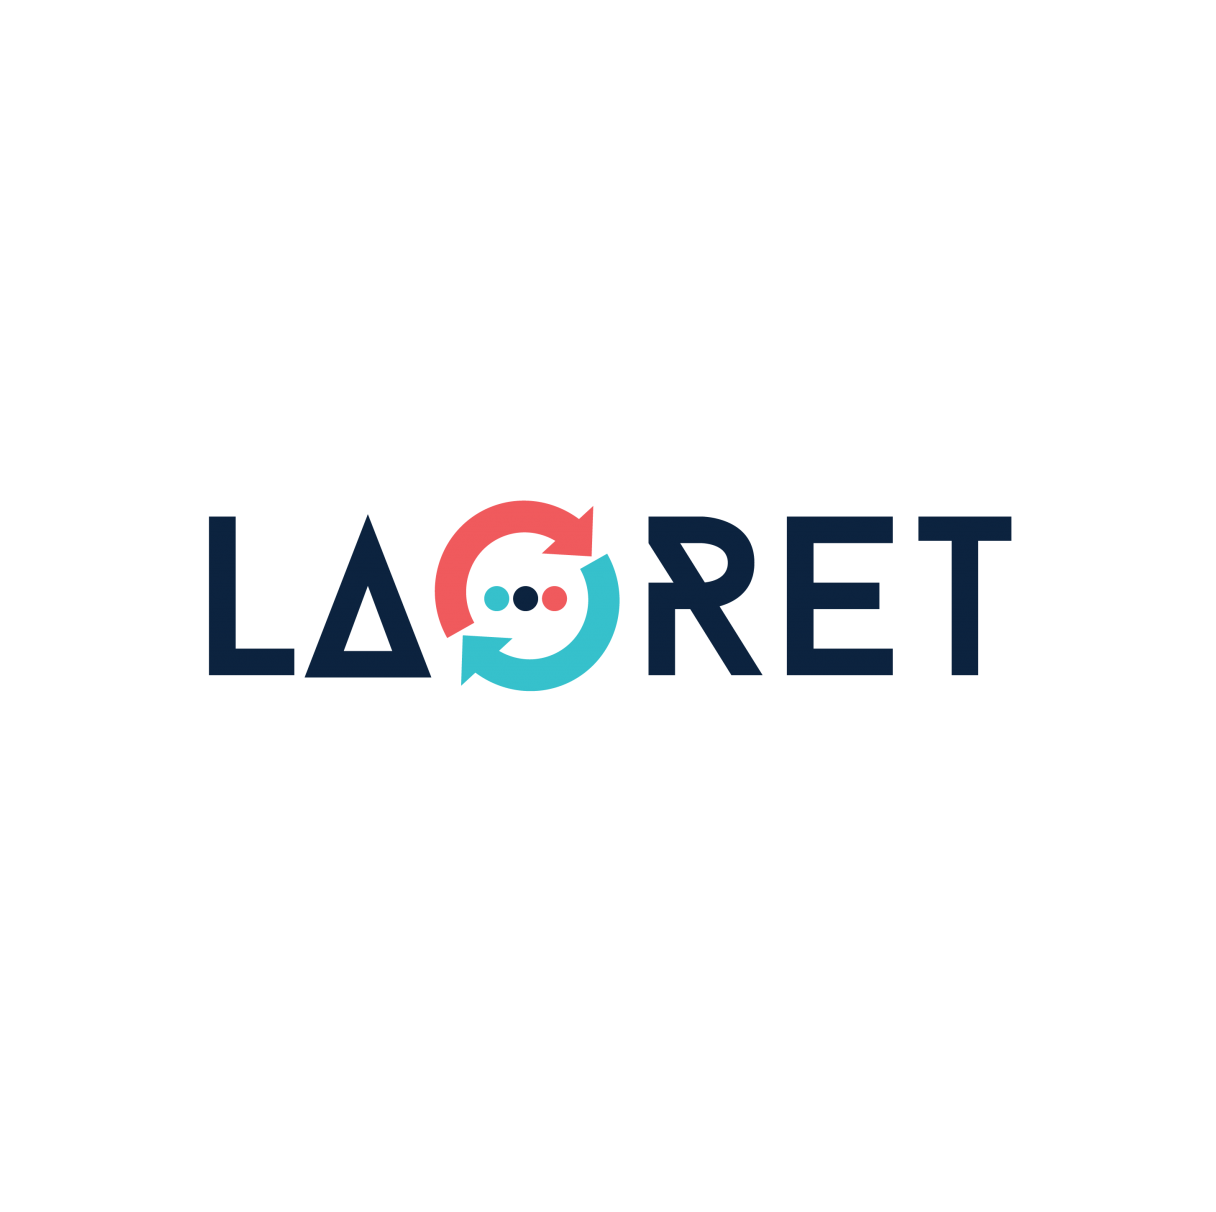 Laoret